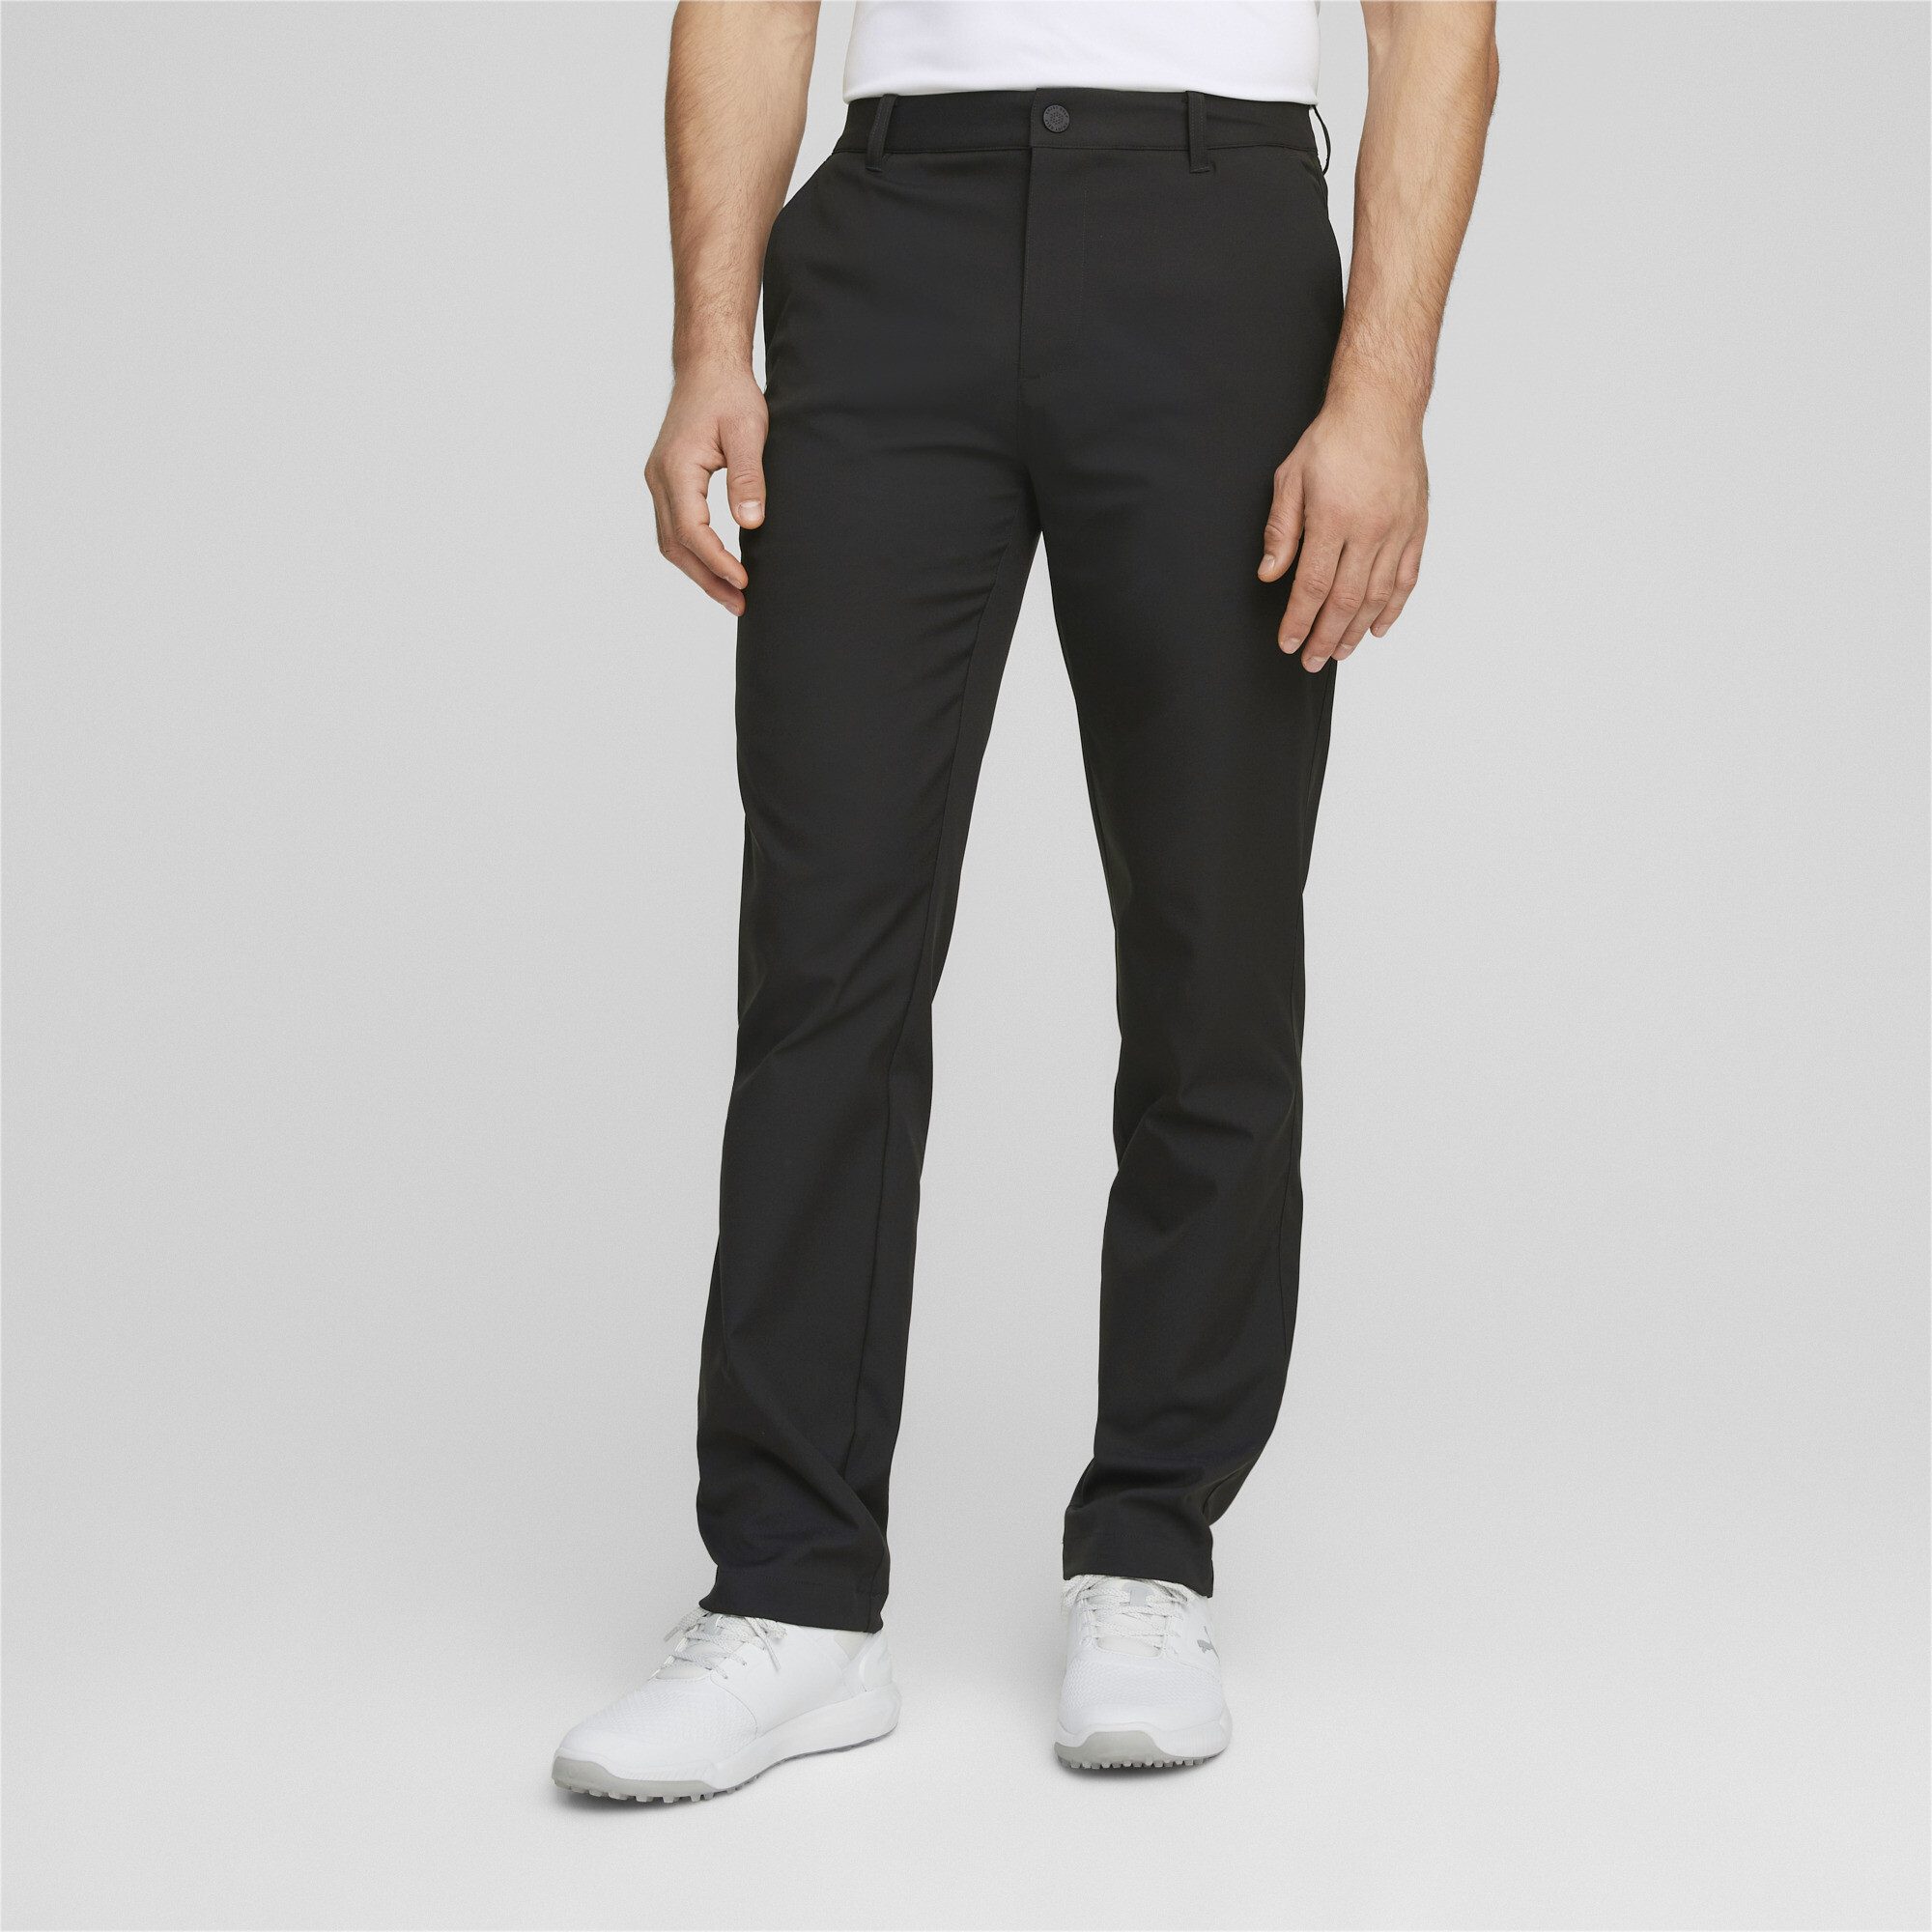 Men's Puma Dealer Golf Pants, Black, Size 38/32, Clothing